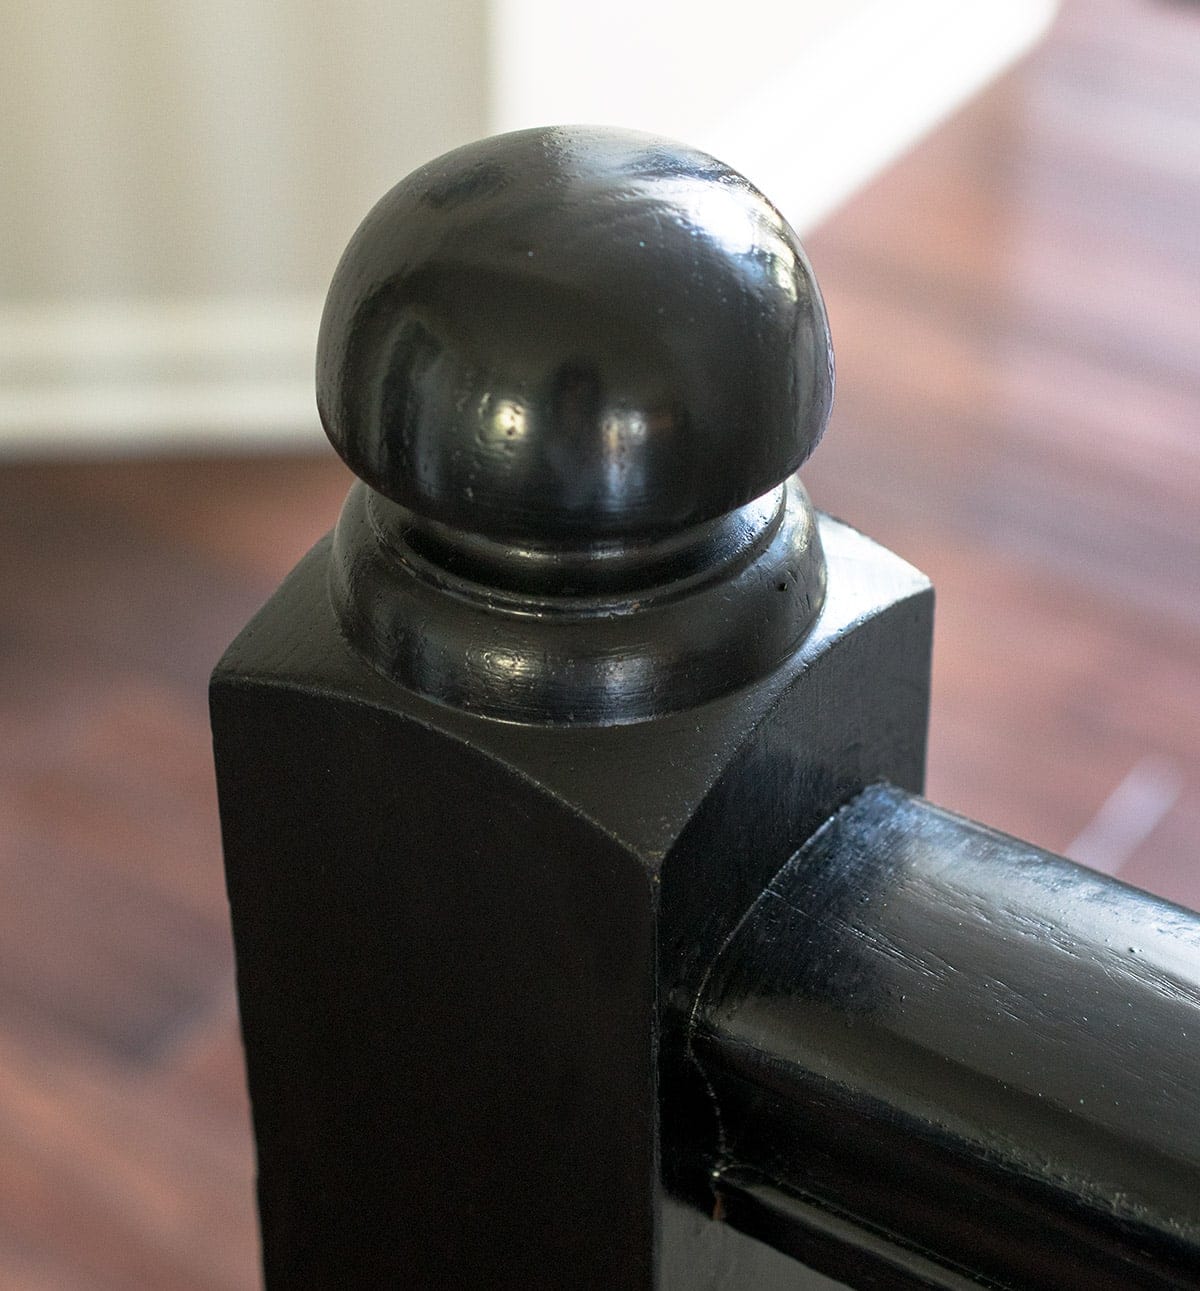 Benjamin Moore Advance Black painted stair knob closeup showing the satin sheen.